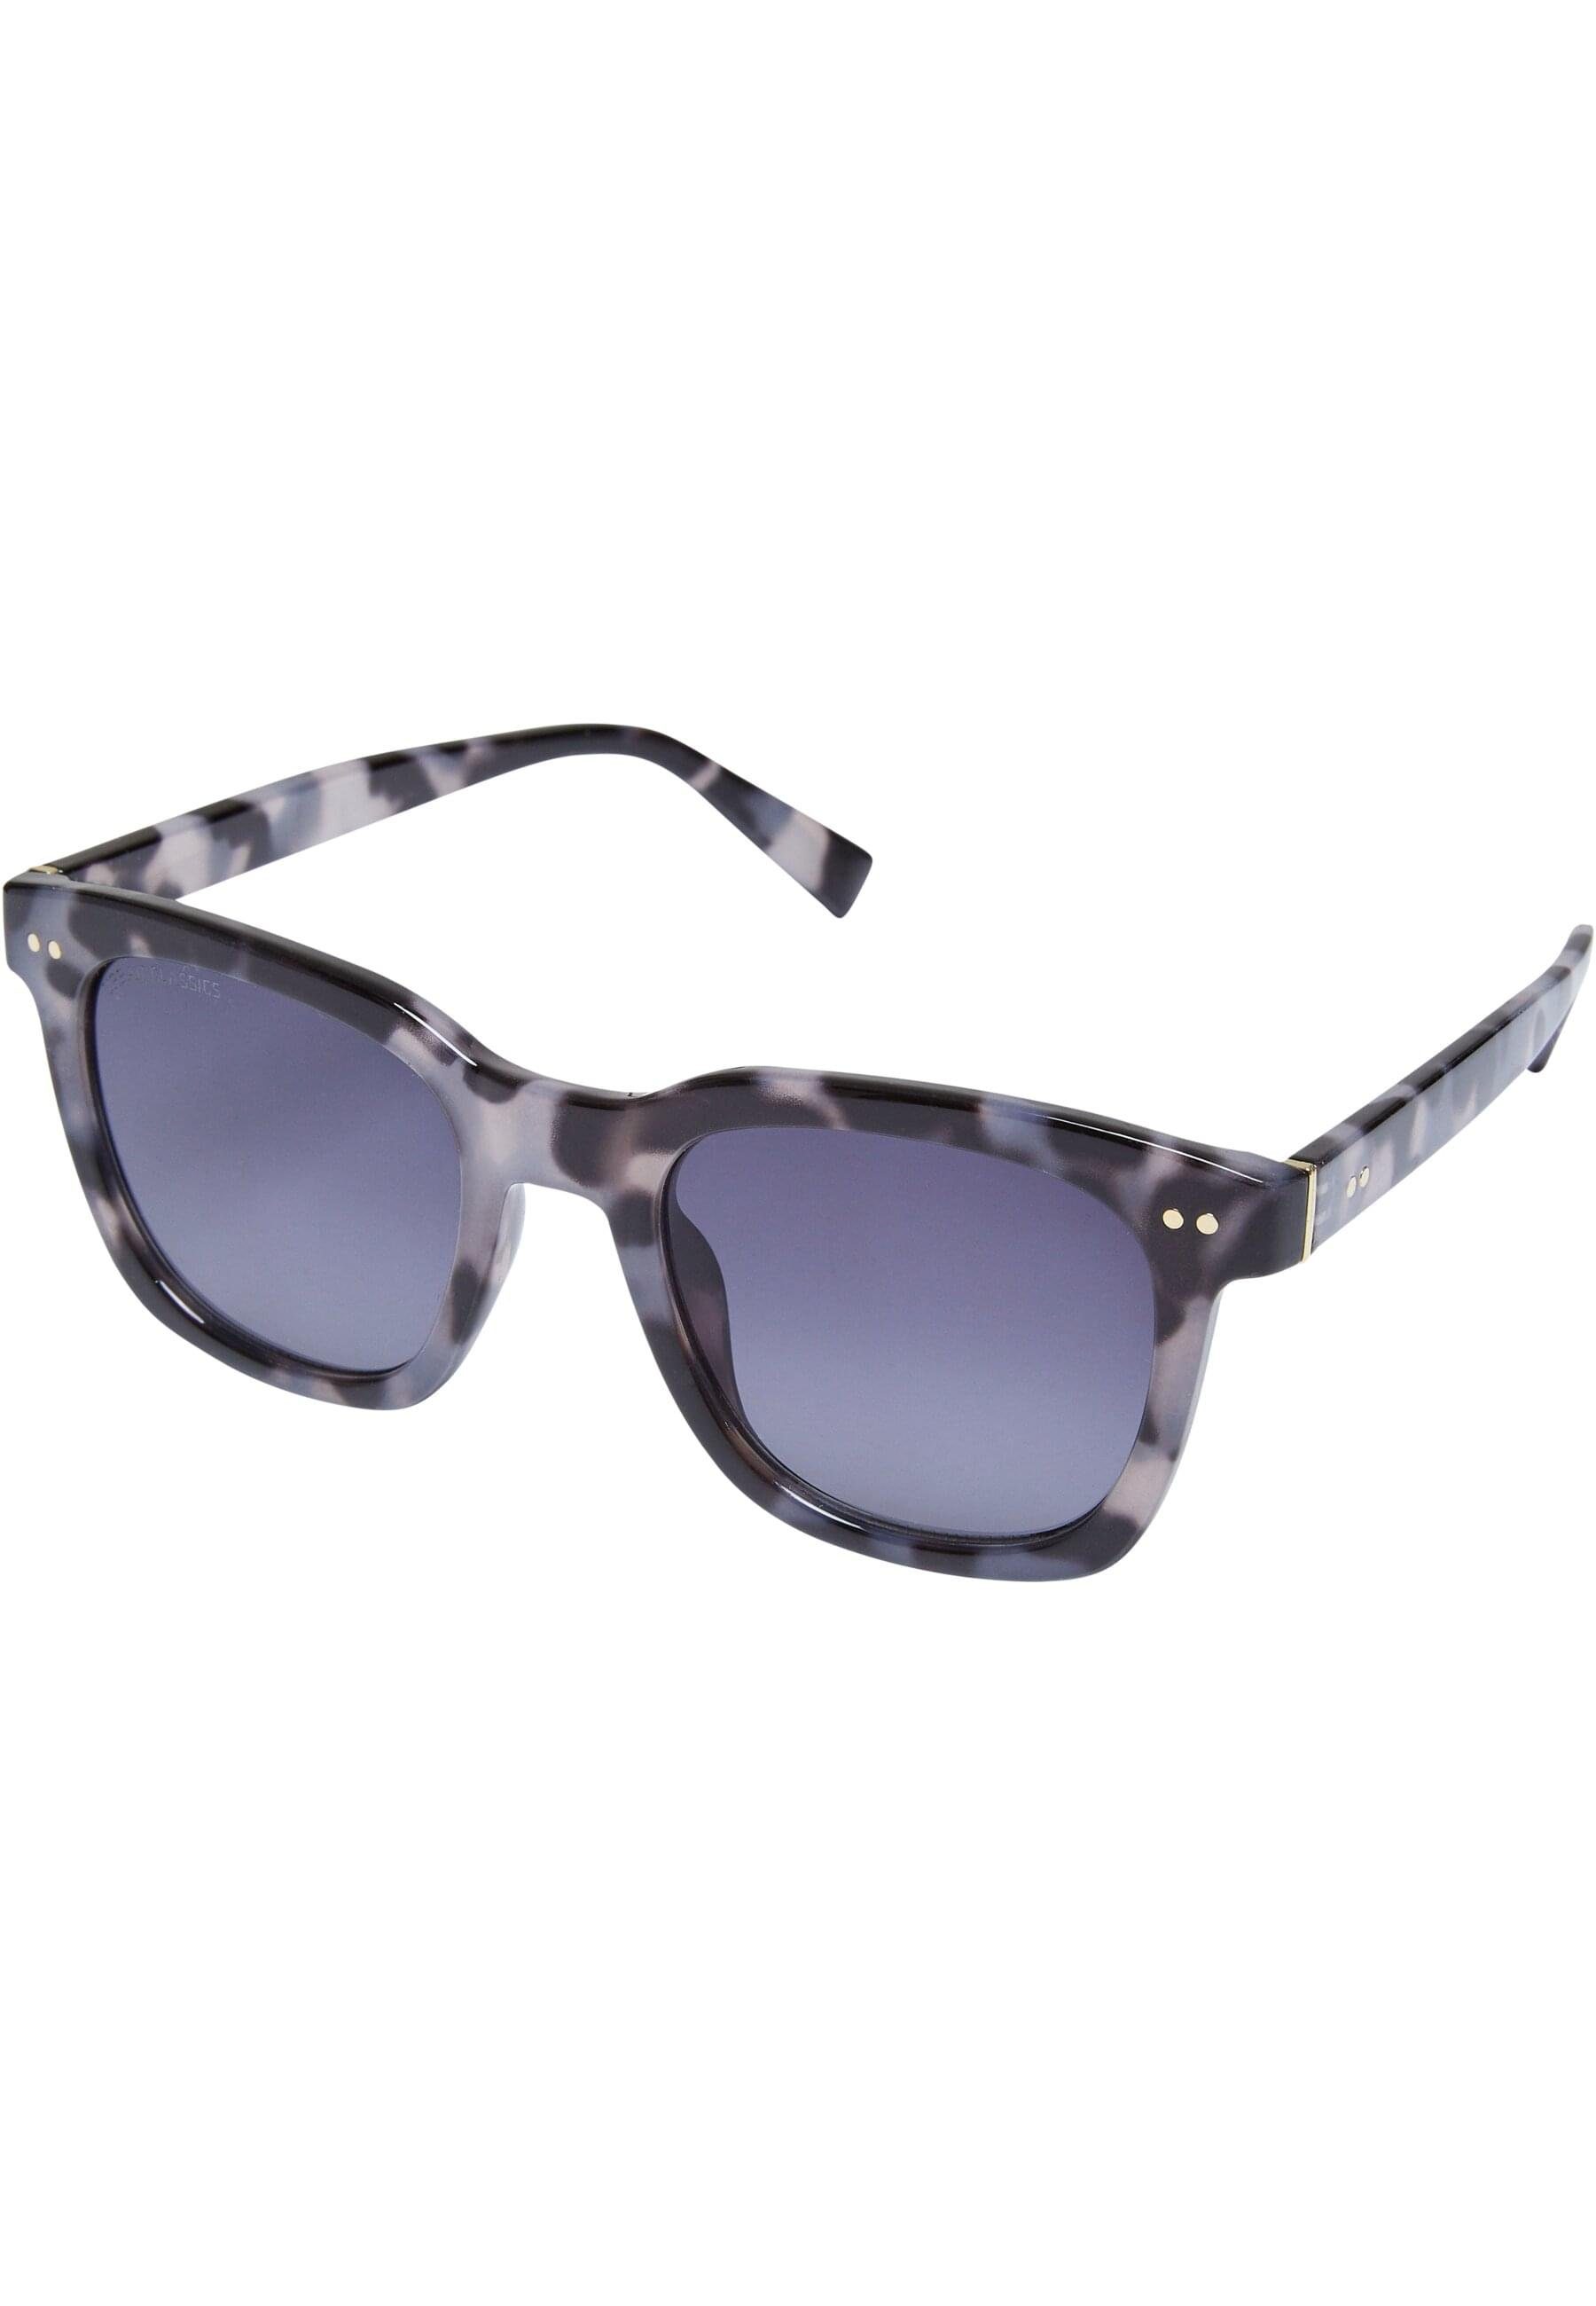 CLASSICS Sonnenbrille Unisex Sunglasses amber/black URBAN Naples